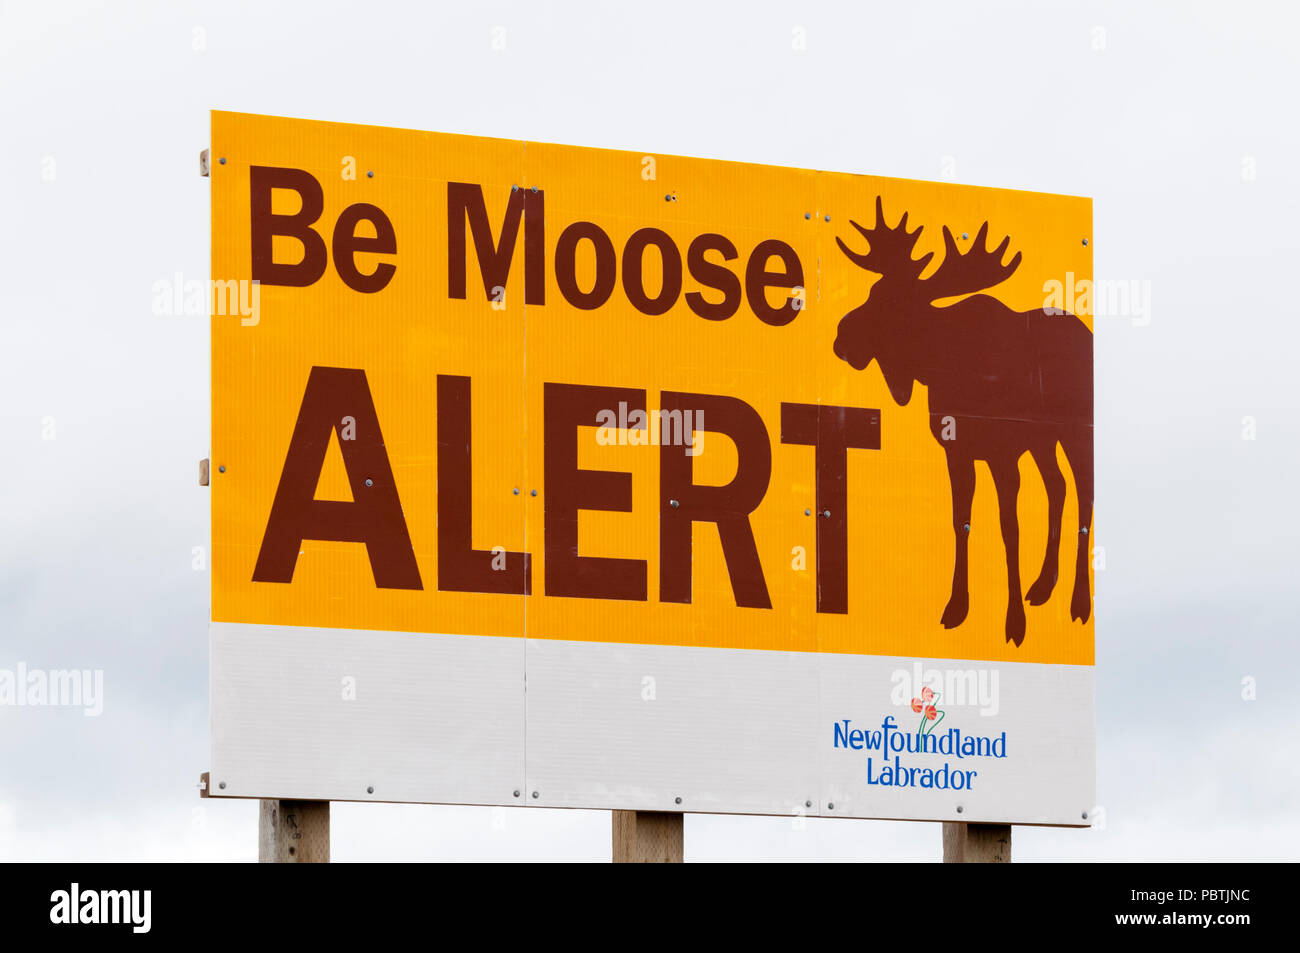 Be Moose Alert warning sign in Newfoundland Stock Photo